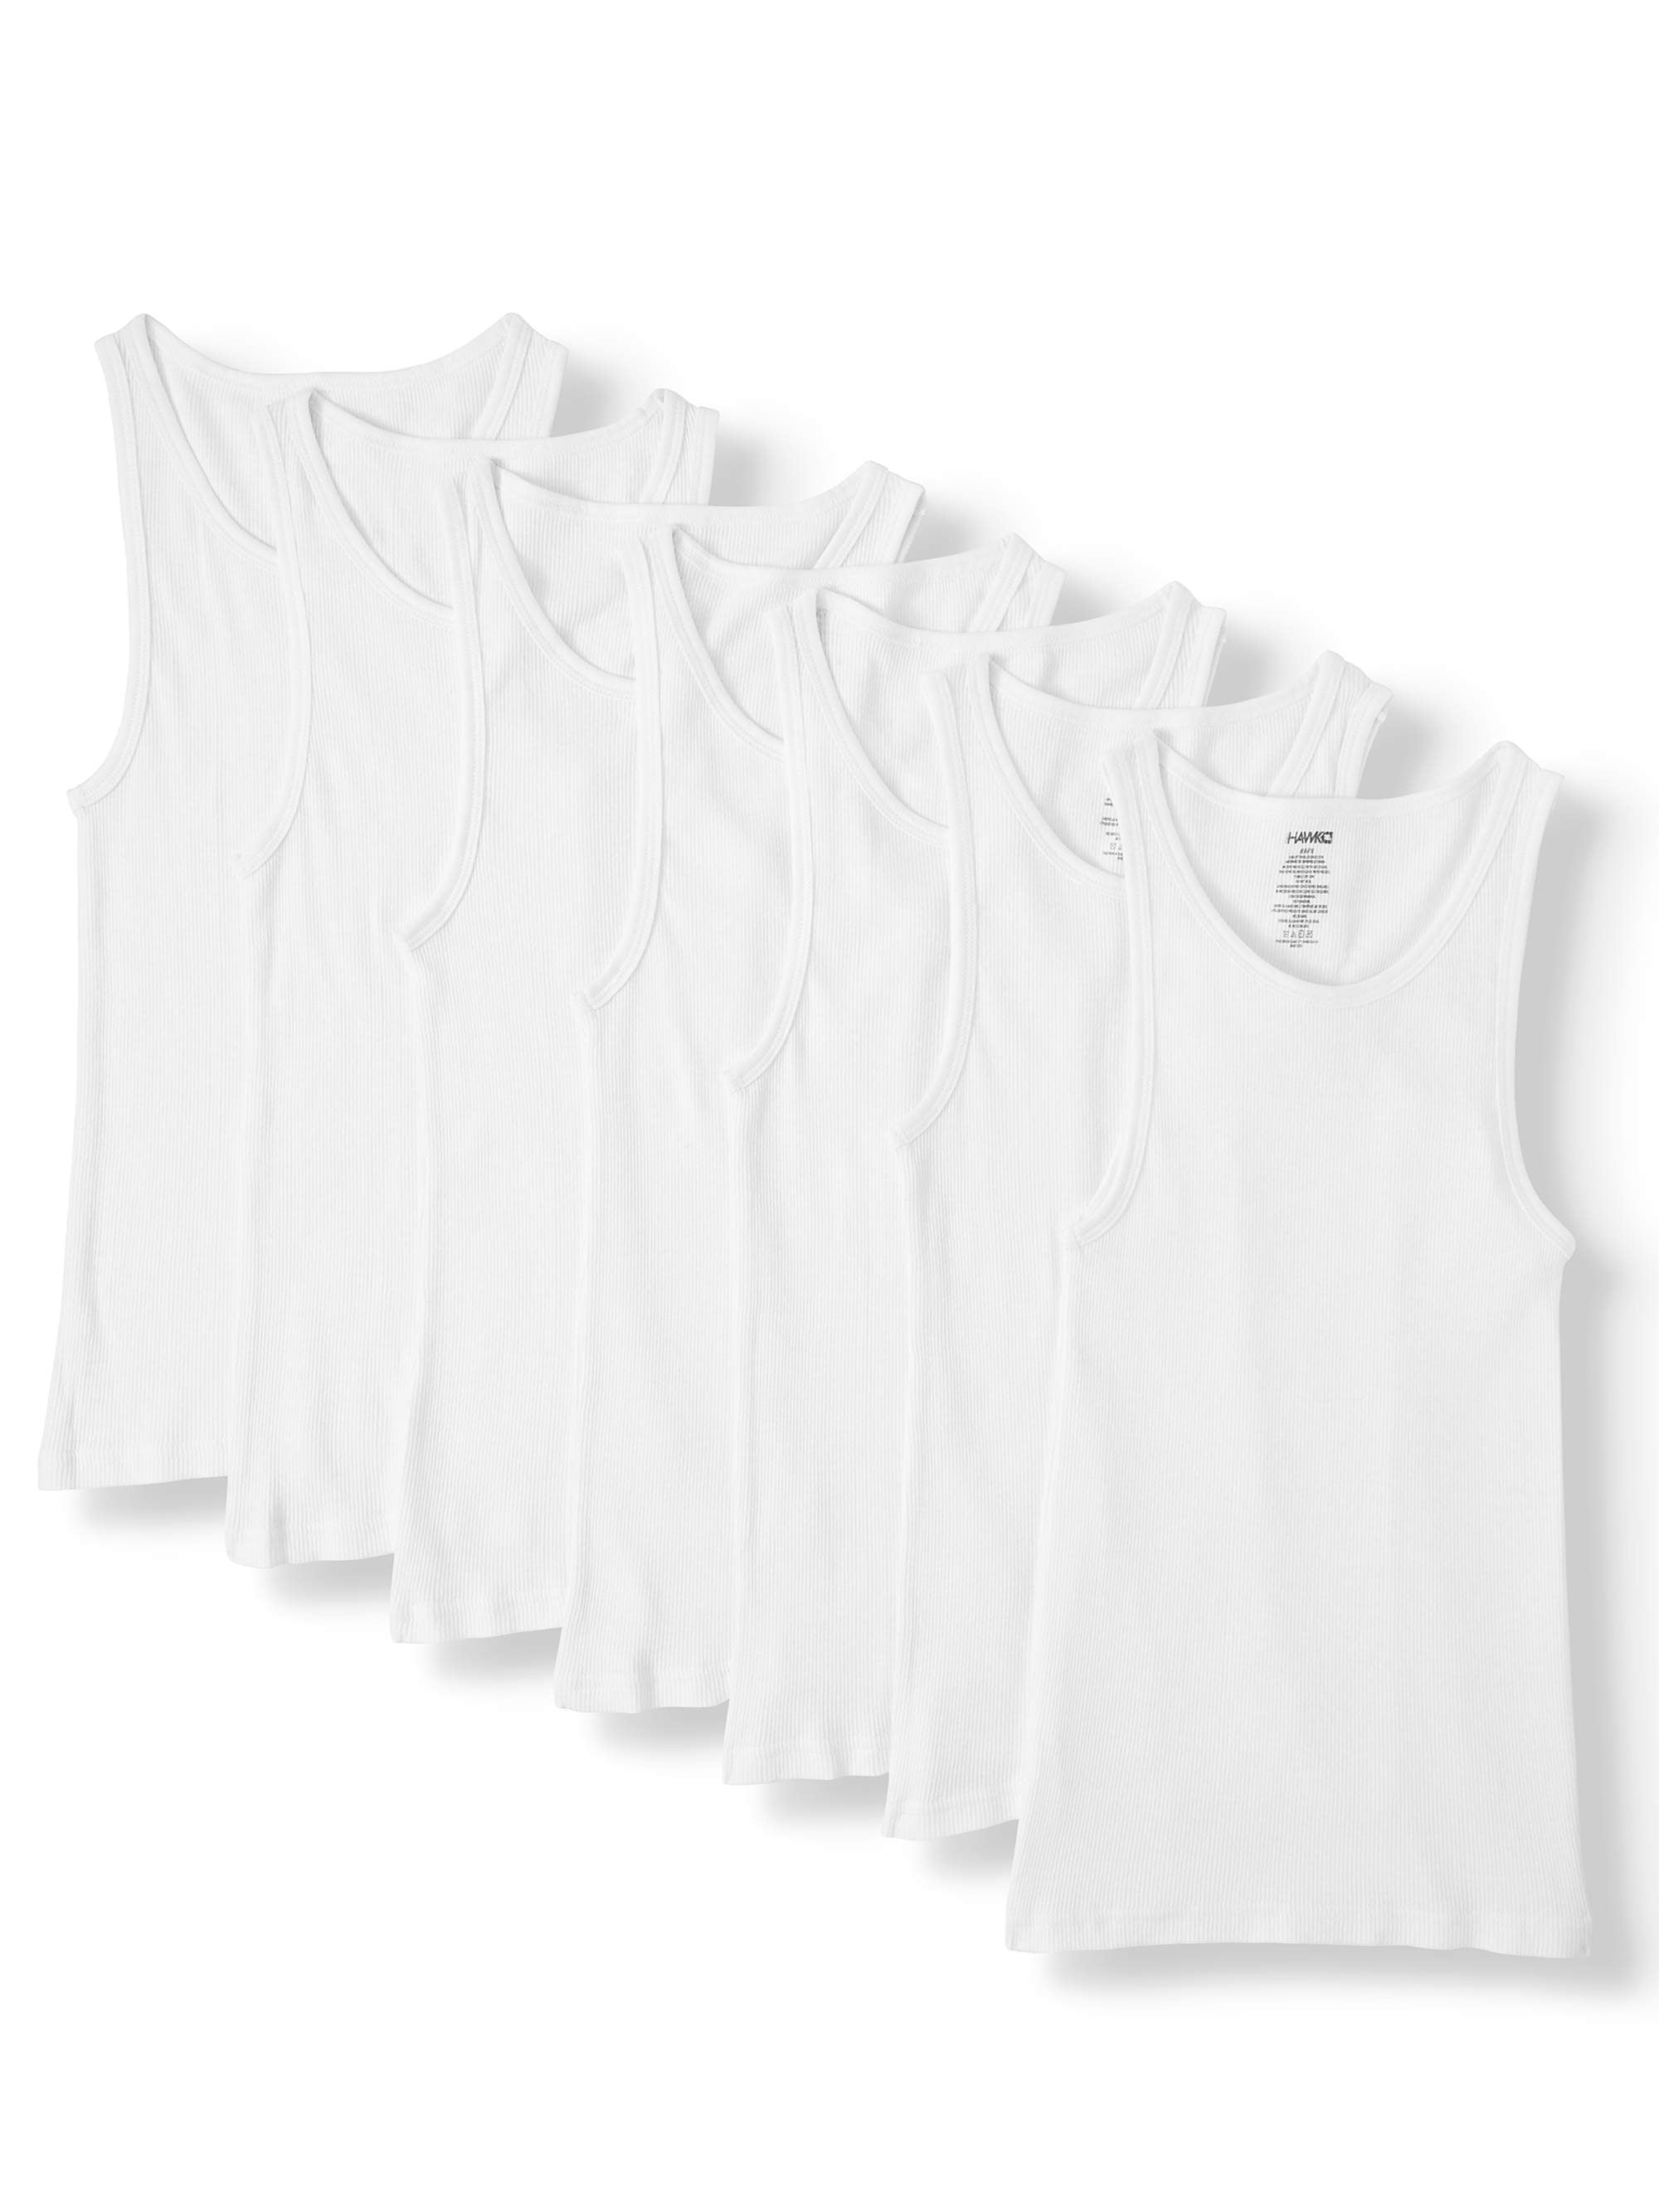 Tony Hawk Boys Undershirts, 7 Pack A-Shirt Tanks Sizes 7-16 - Walmart.com